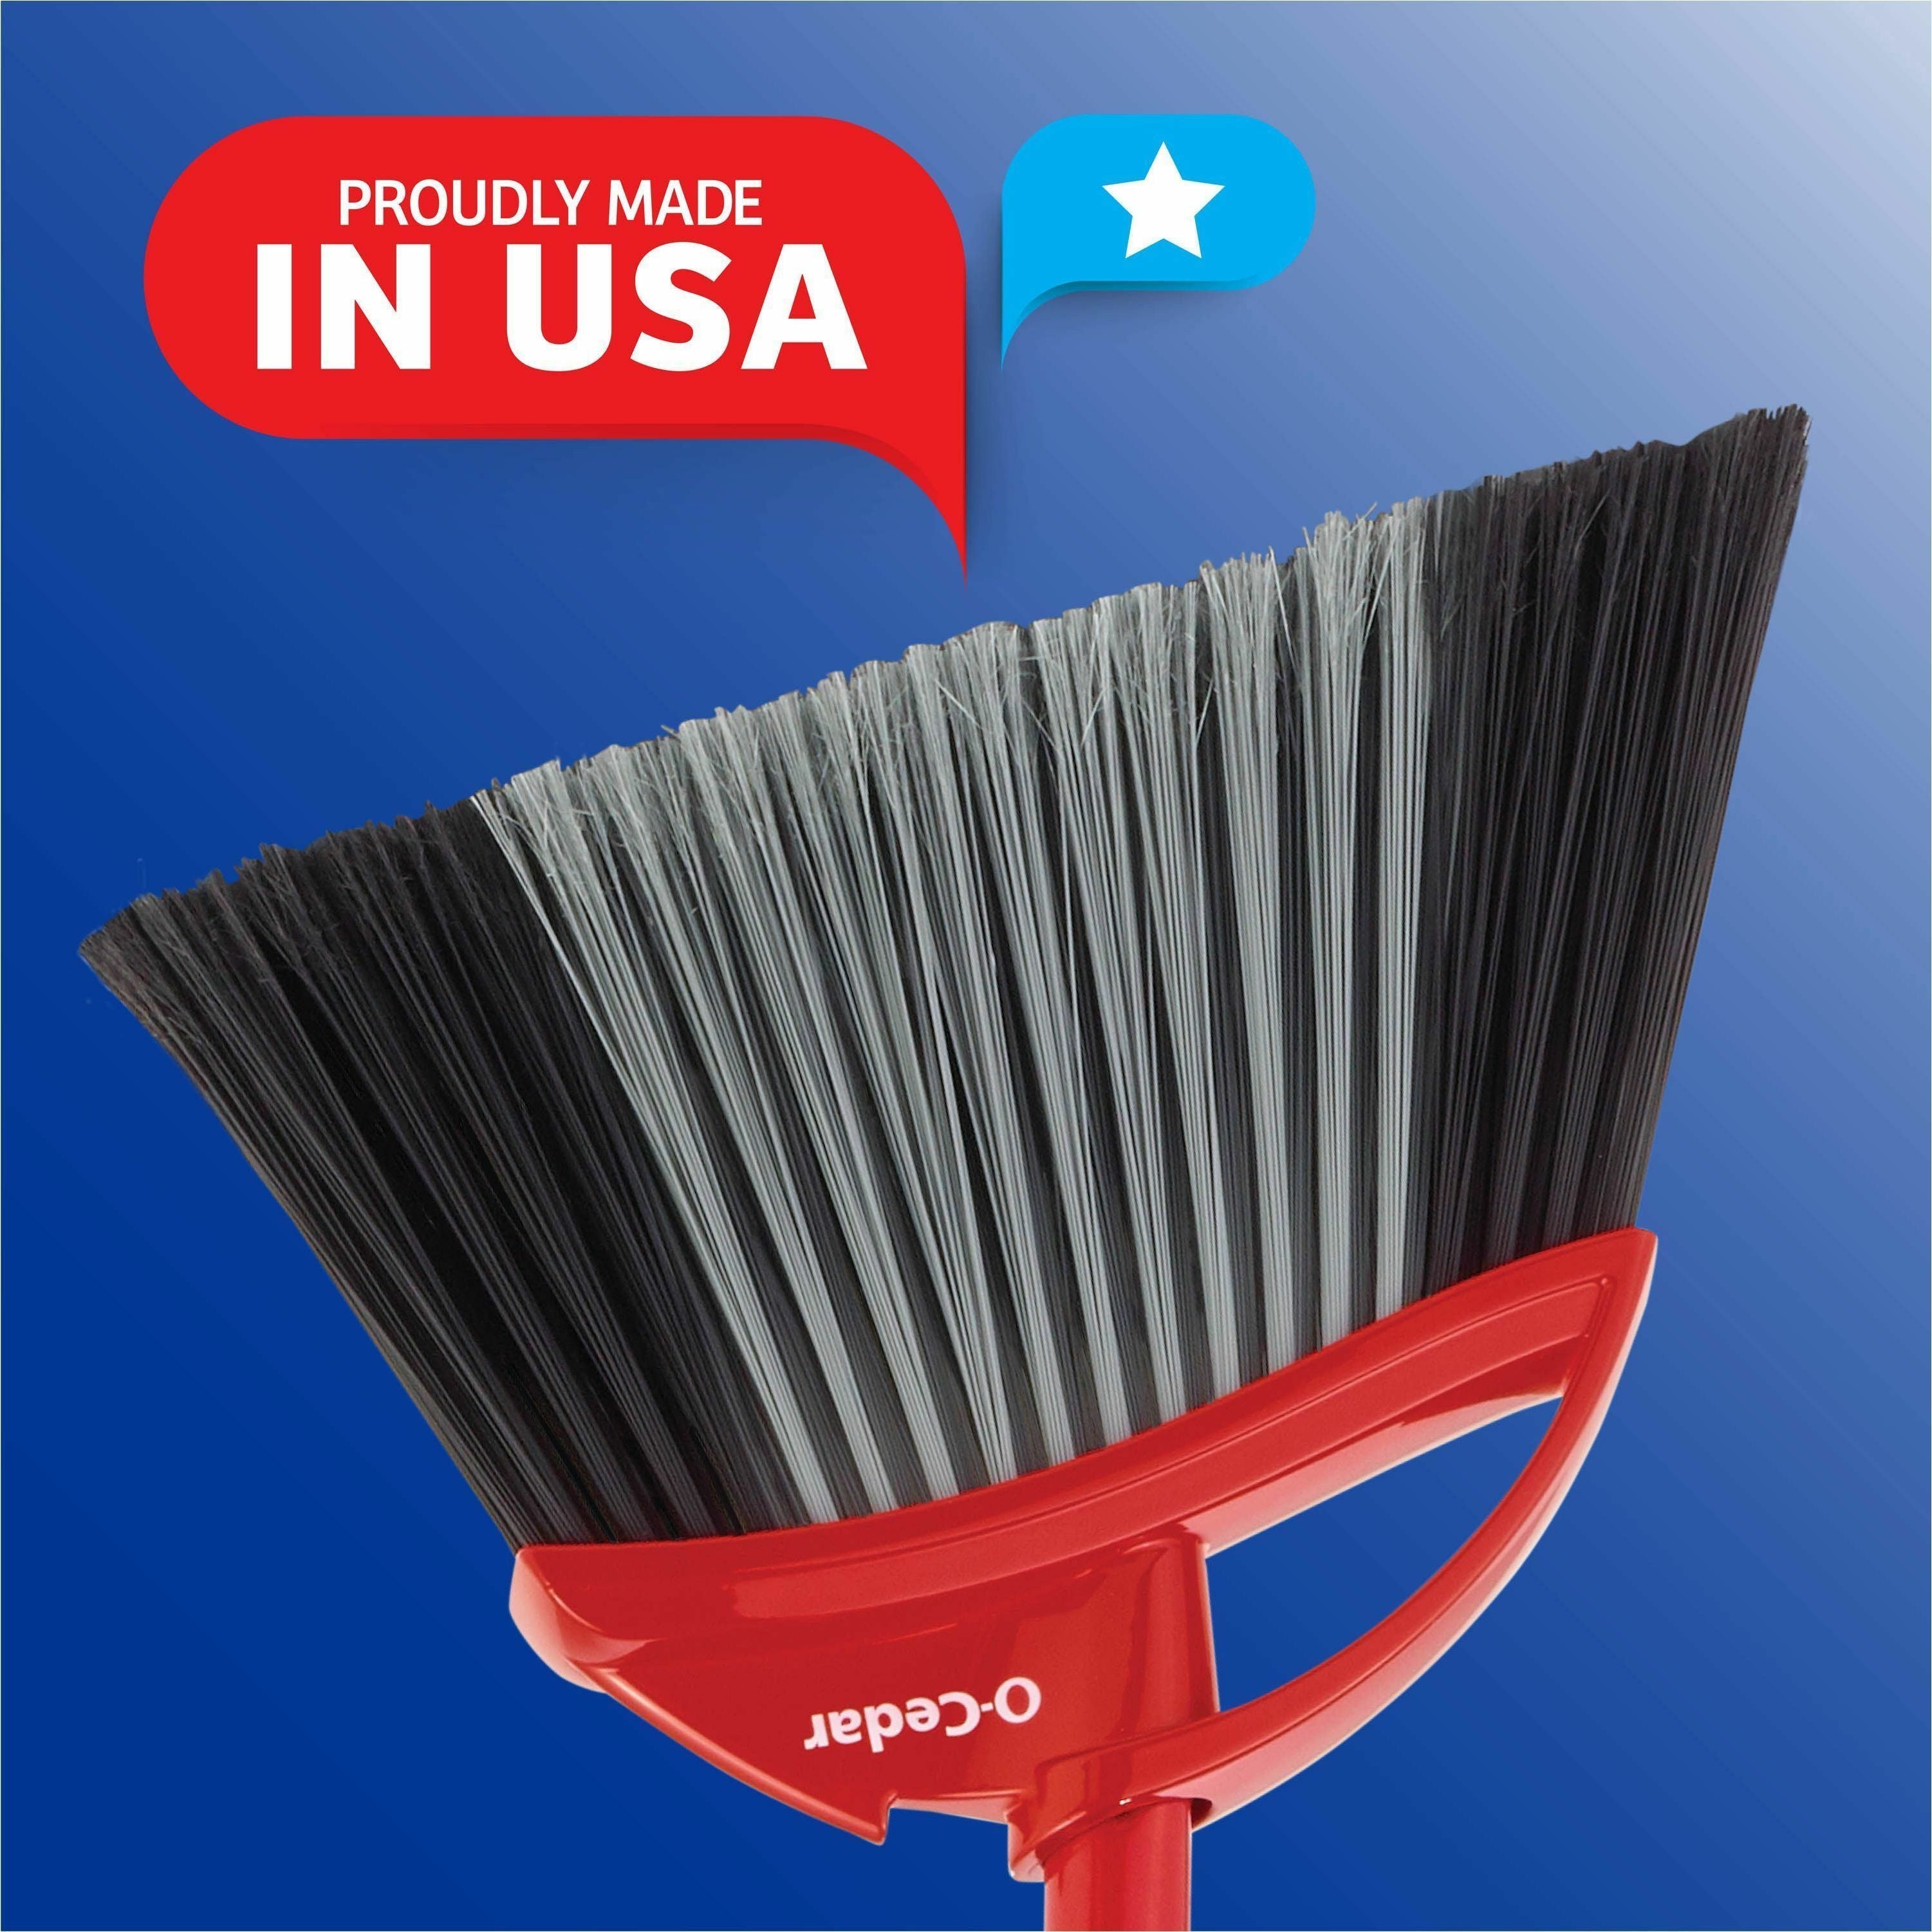 o-cedar-powercorner-pet-pro-broom-red-black-gray-1-each_fhp168020 - 7